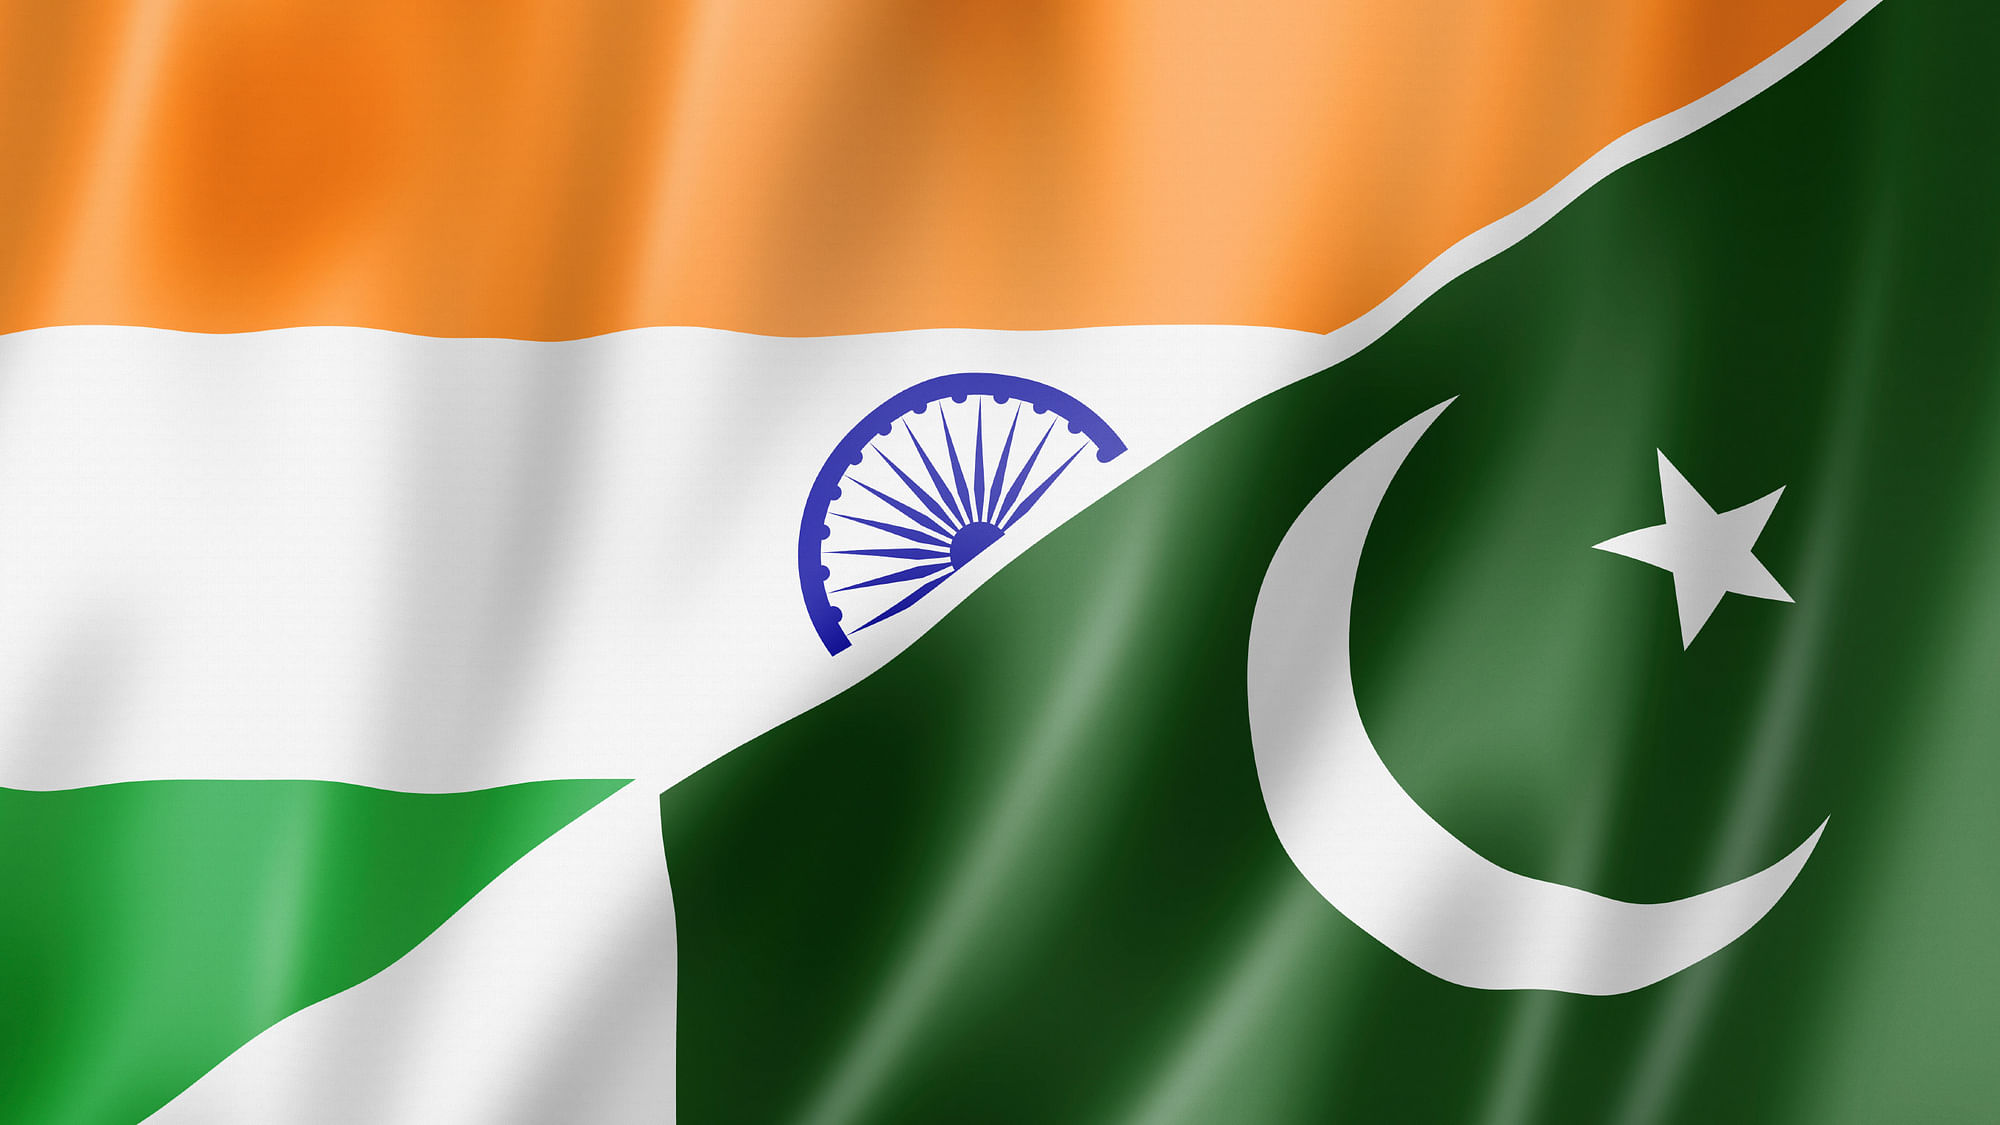 Flags of India and Pakistan. (Photo: iStockphoto)